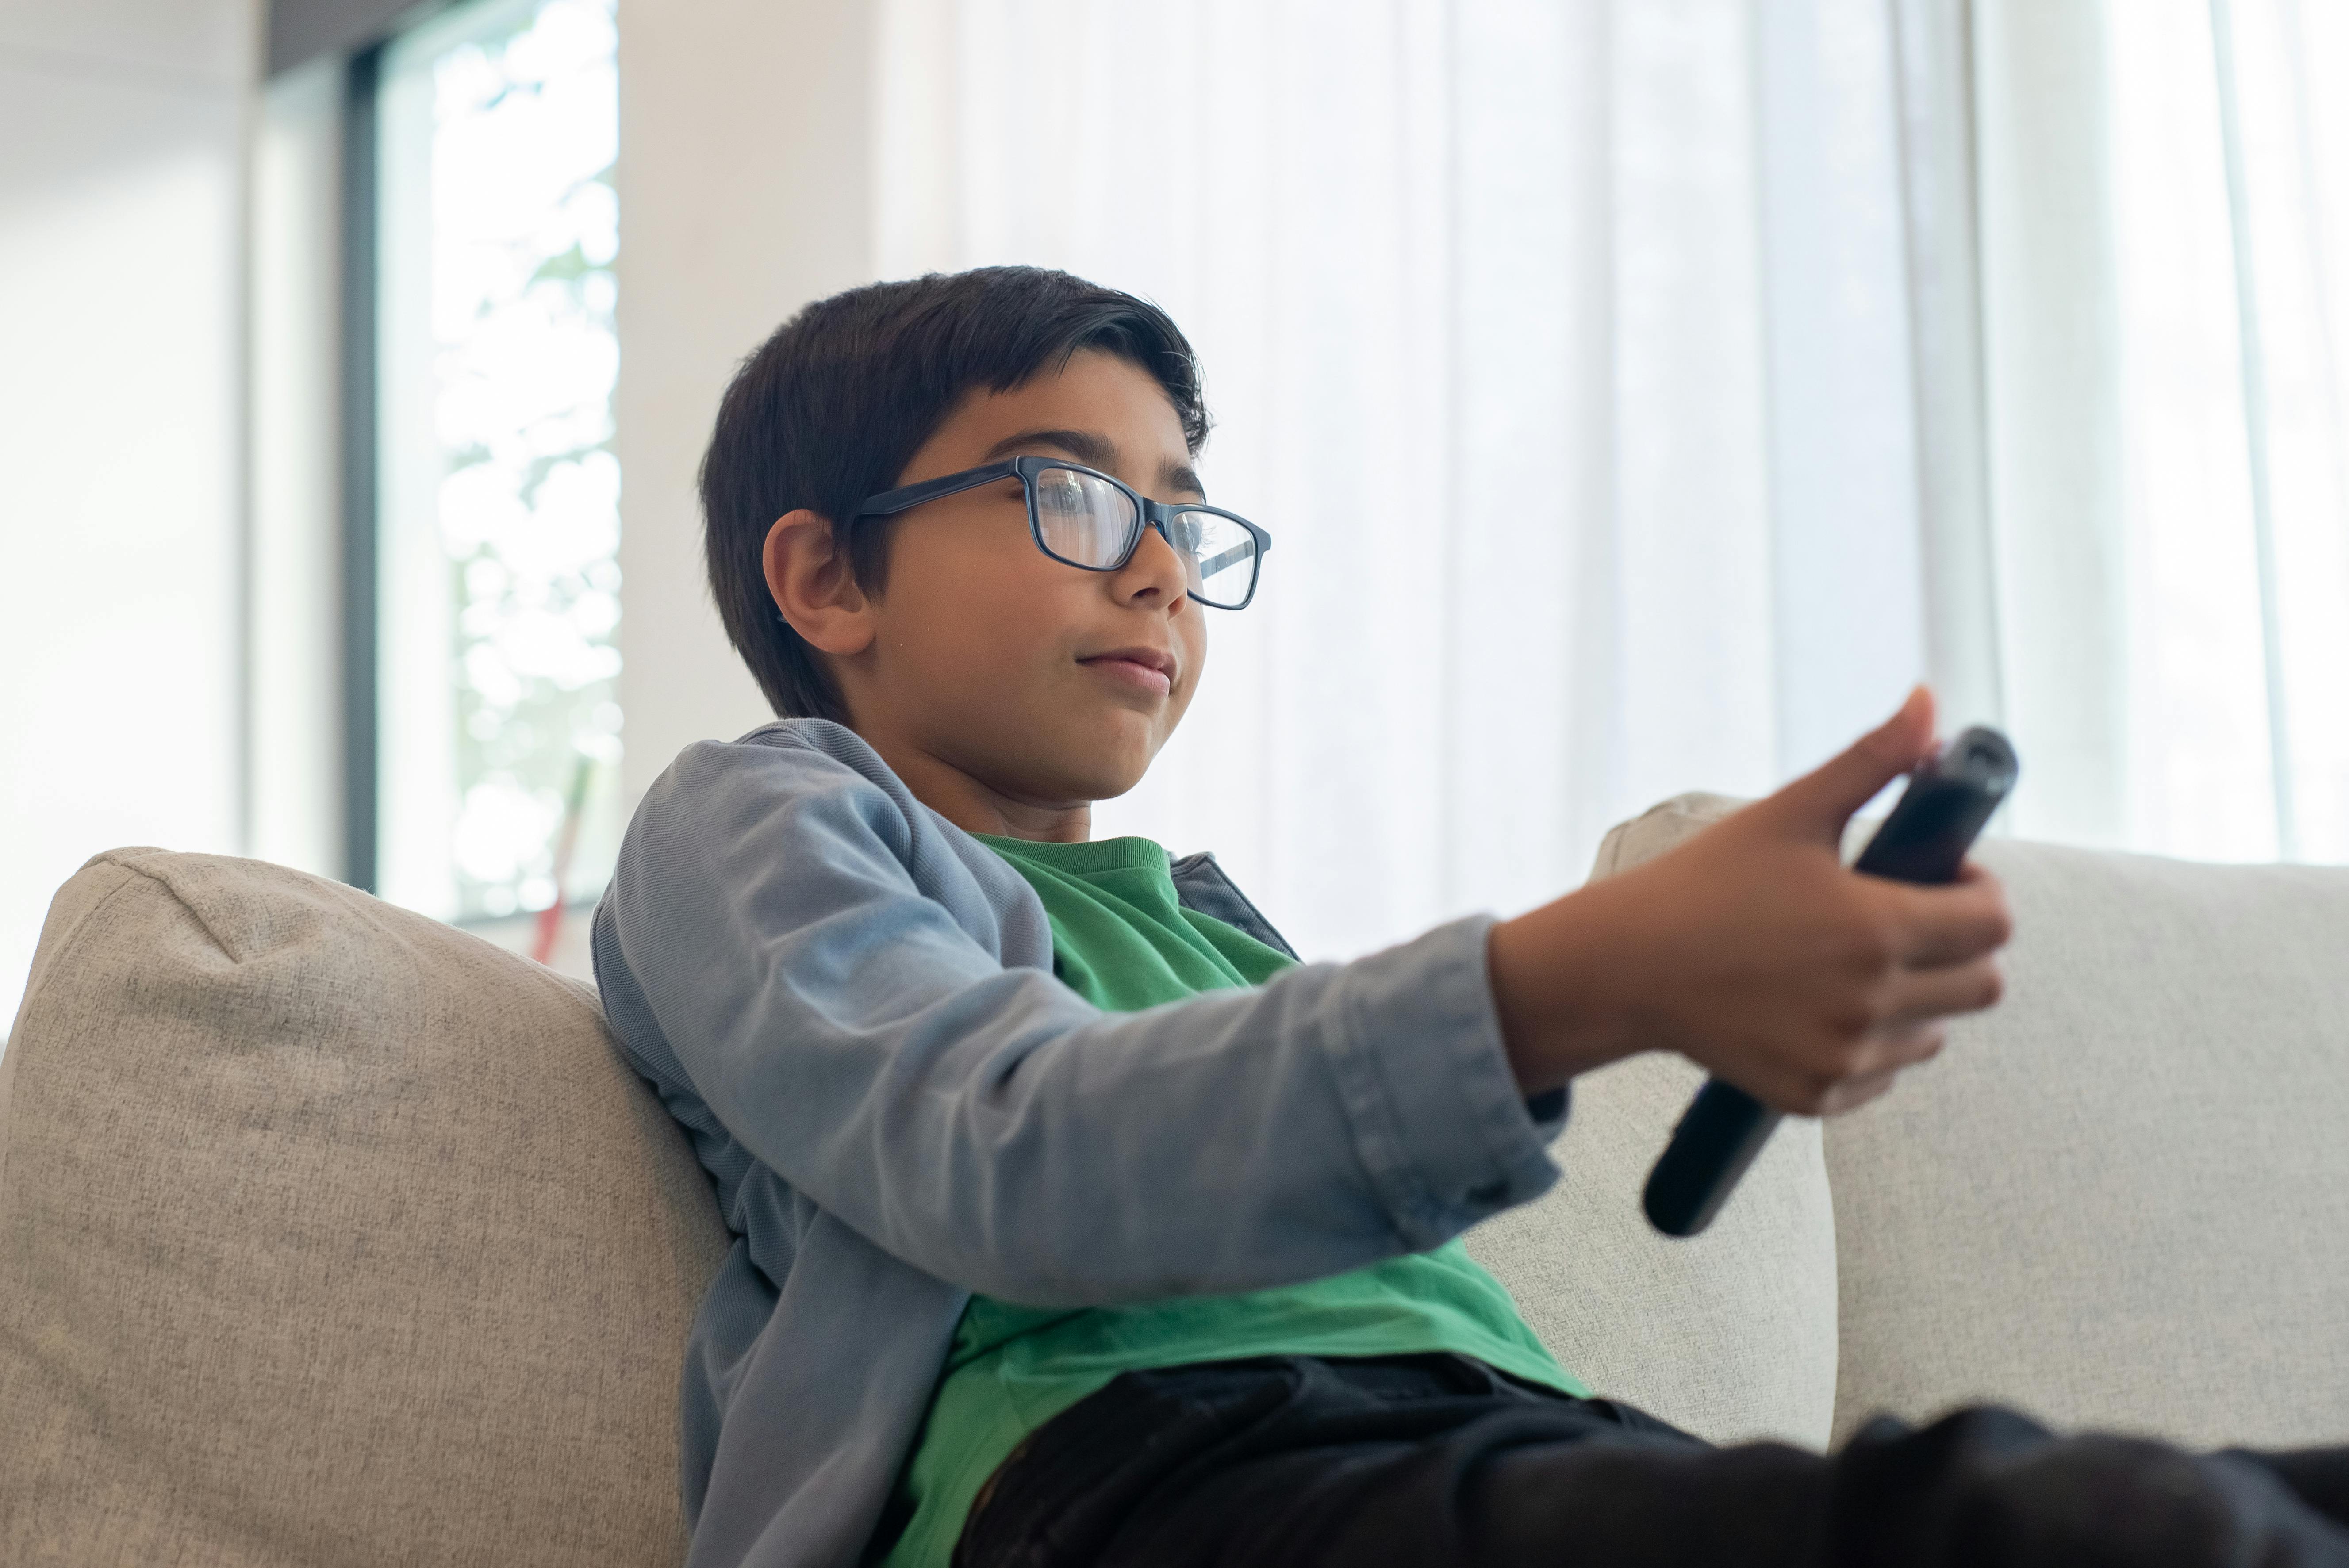 A boy holding a remote control